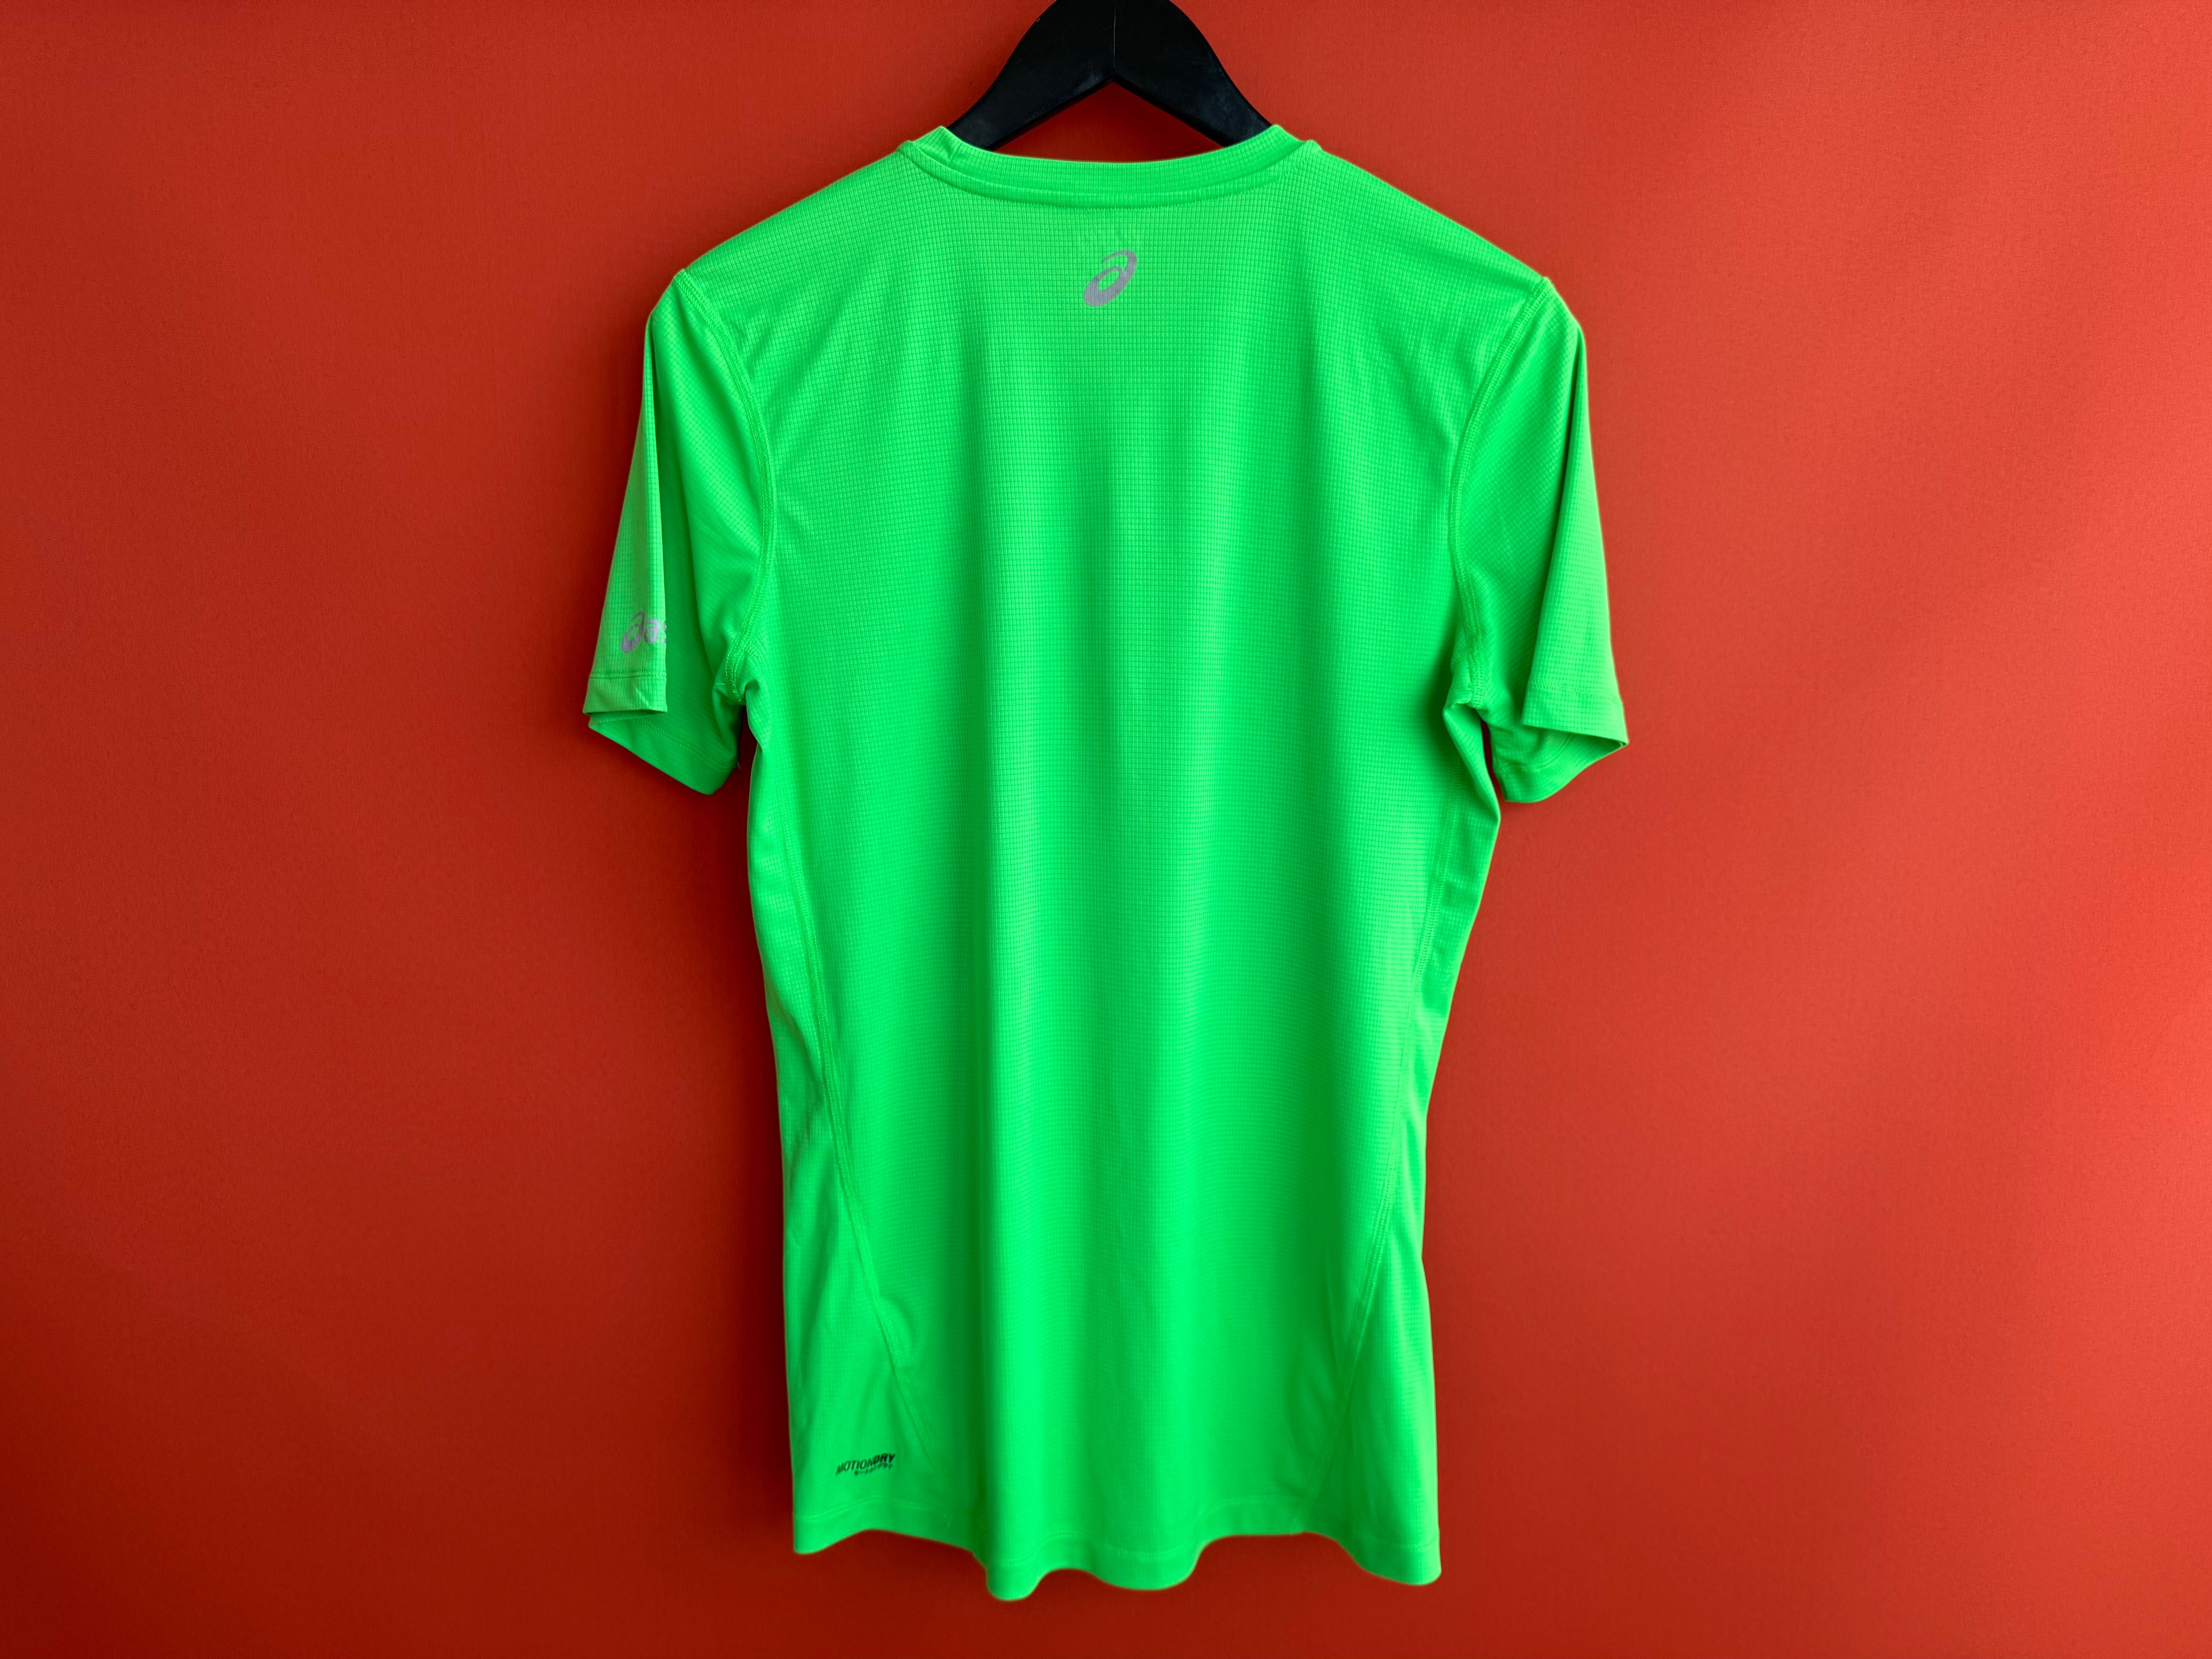 Asics оригинал мужская спортивная футболка размер S Б У